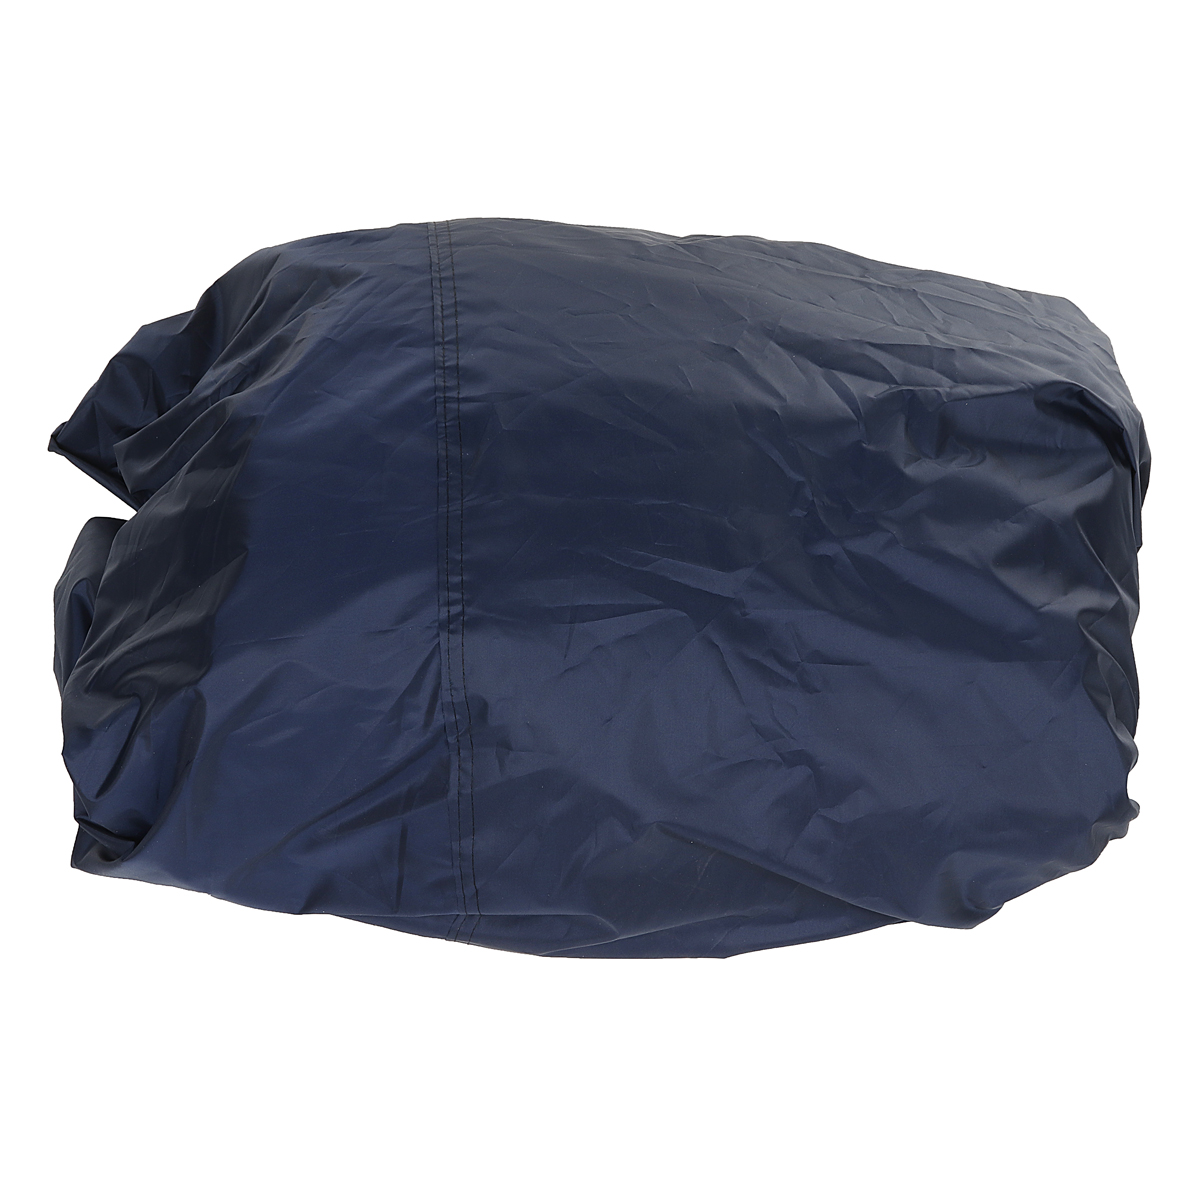 Universal Full Car Cover Outdoor Sun UV Snow Dust Rain Resistant Size - M Pickup